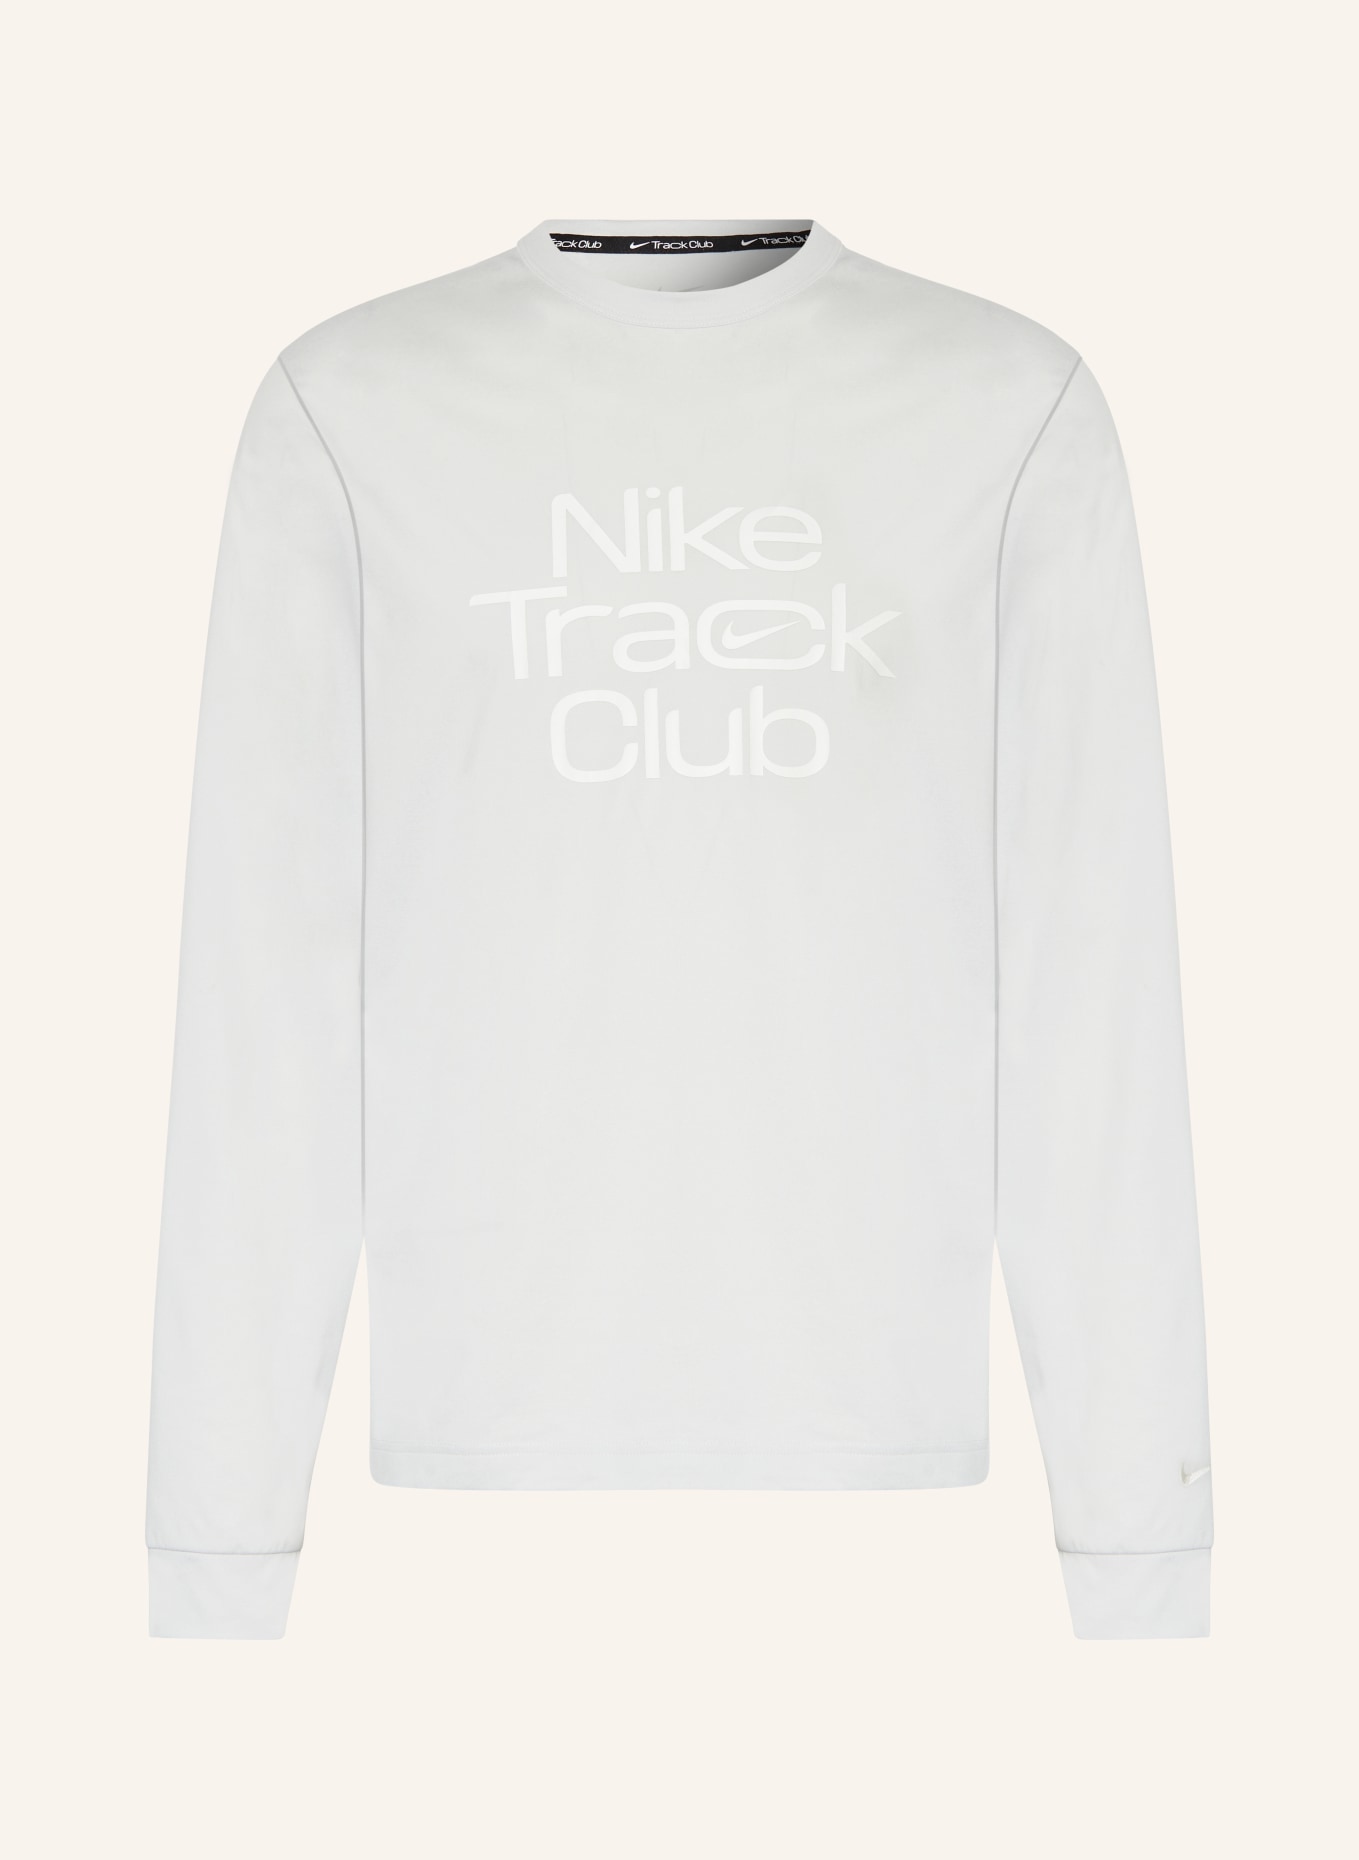 Nike Running shirt TRACK CLUB, Color: LIGHT GRAY/ WHITE (Image 1)